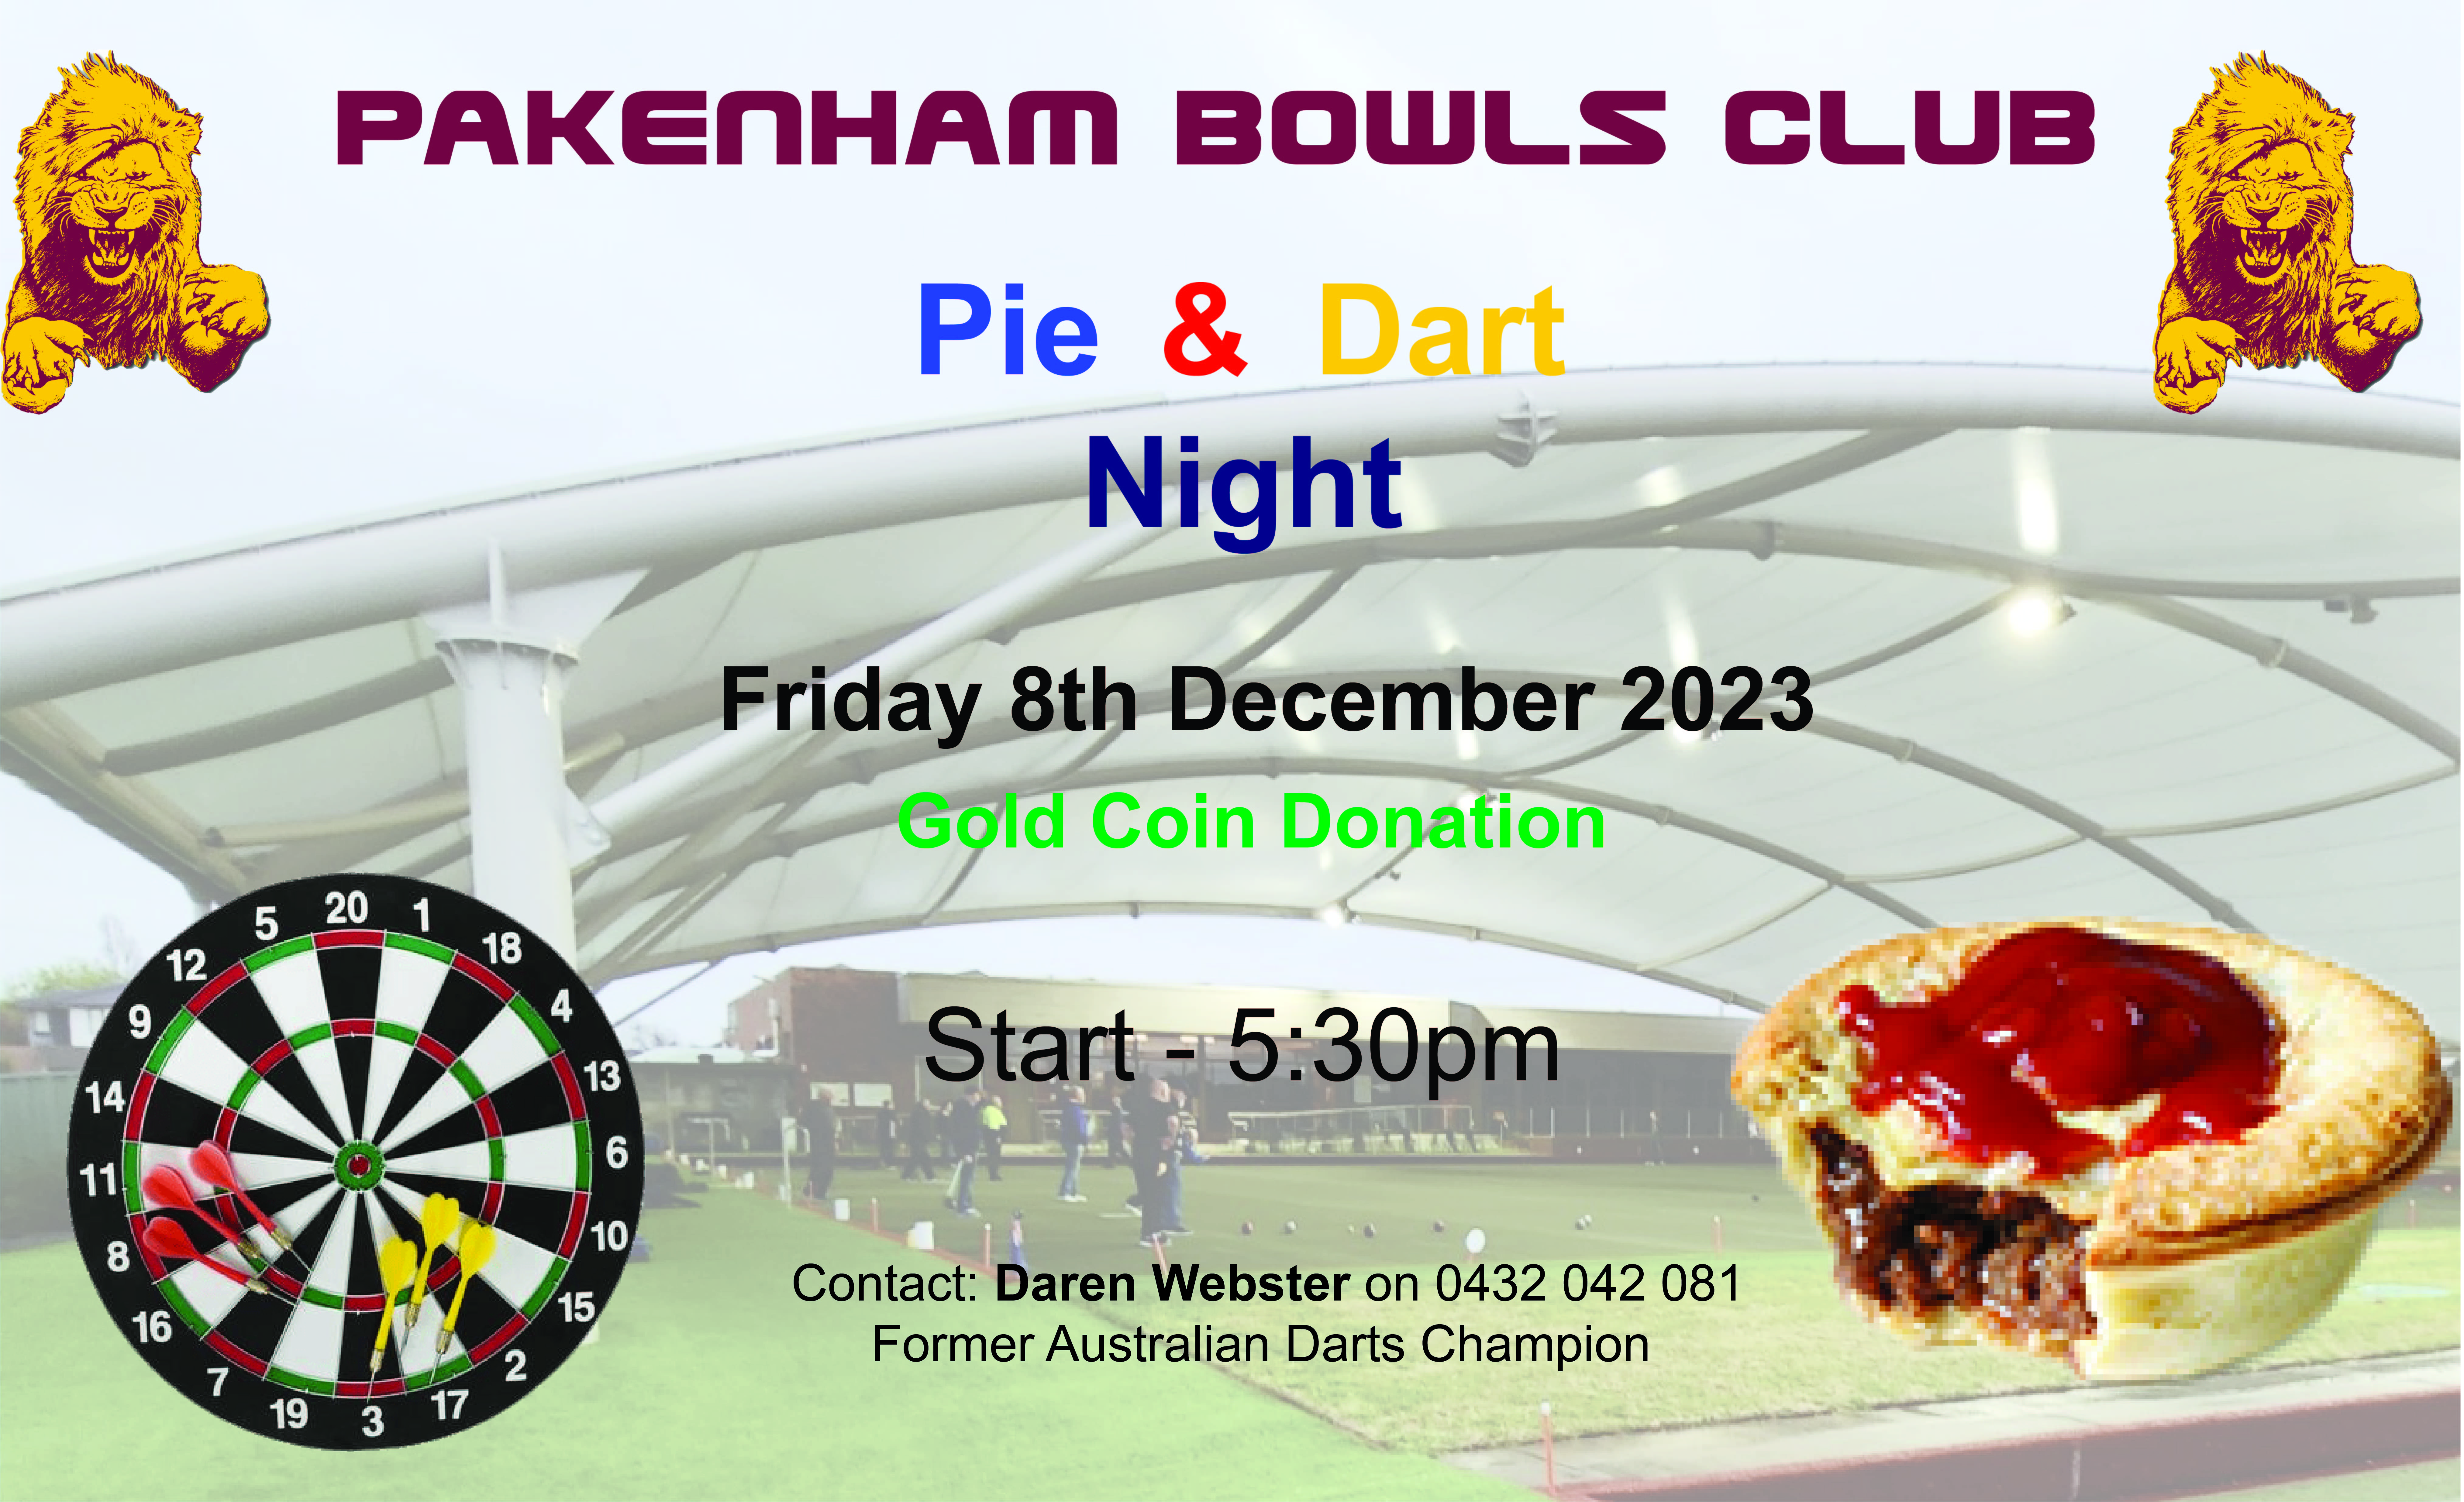 Pakenham bowls club - Pie & Dart Night Friday 8th December 2023 Start 5:30pm - Contact Darren Webster - 0432042081